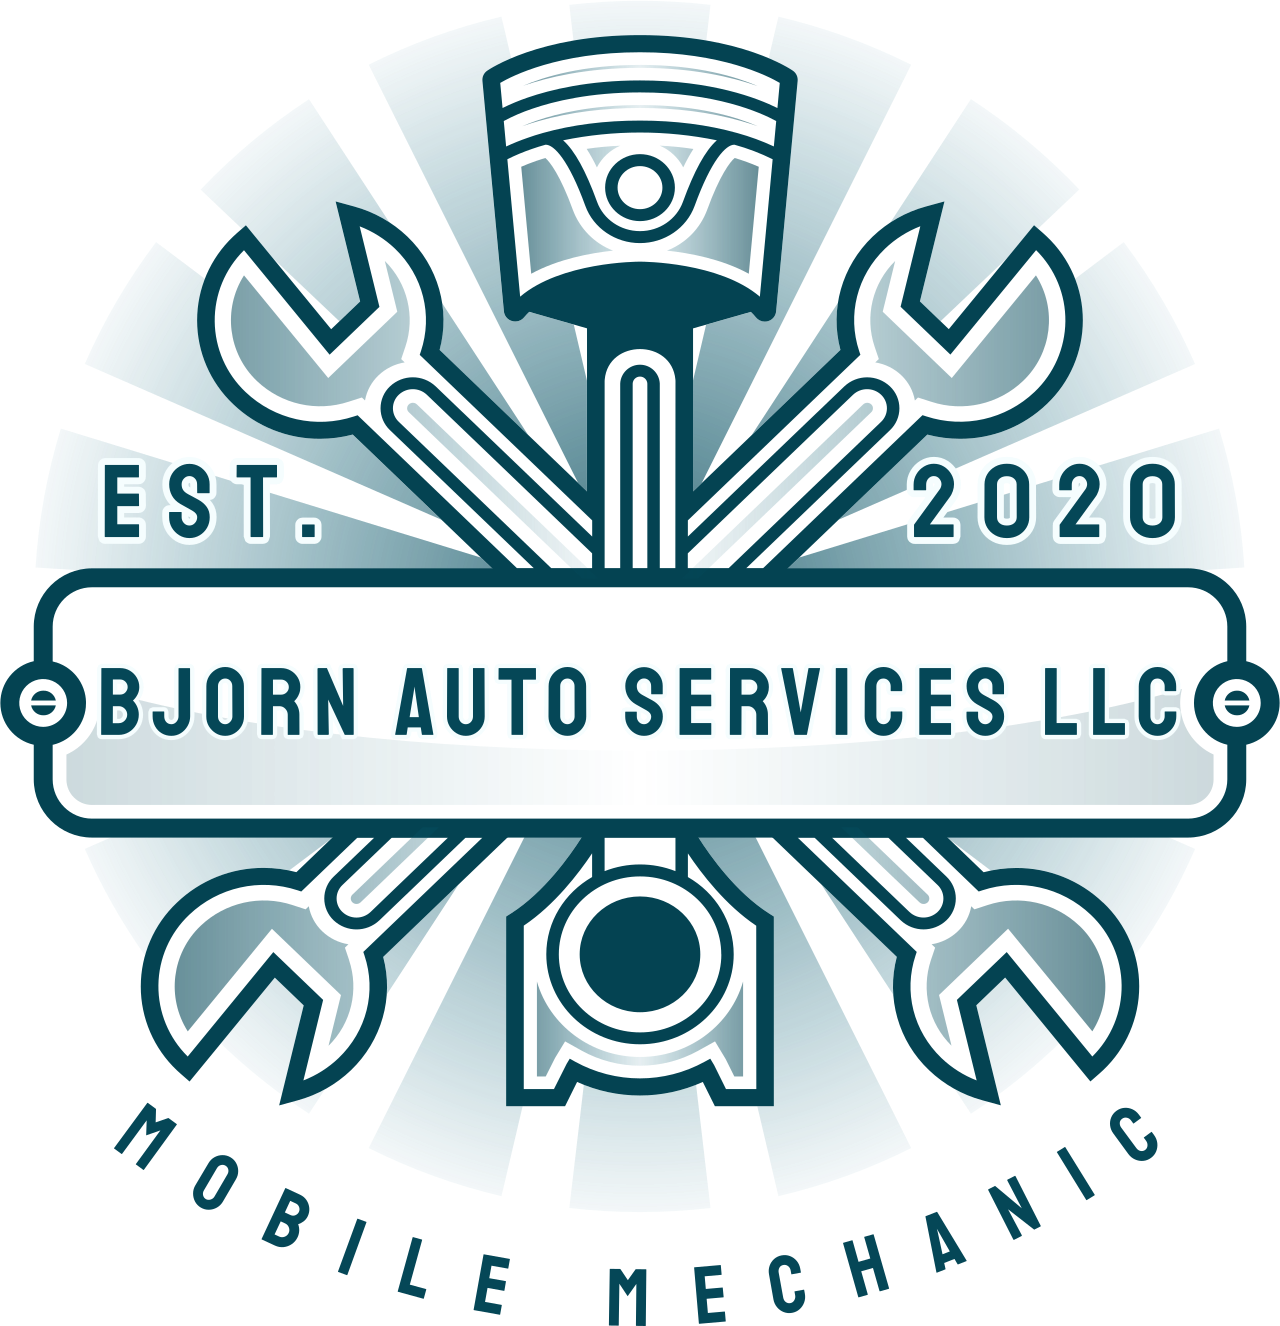 Bjorn Auto Services LLC's logo